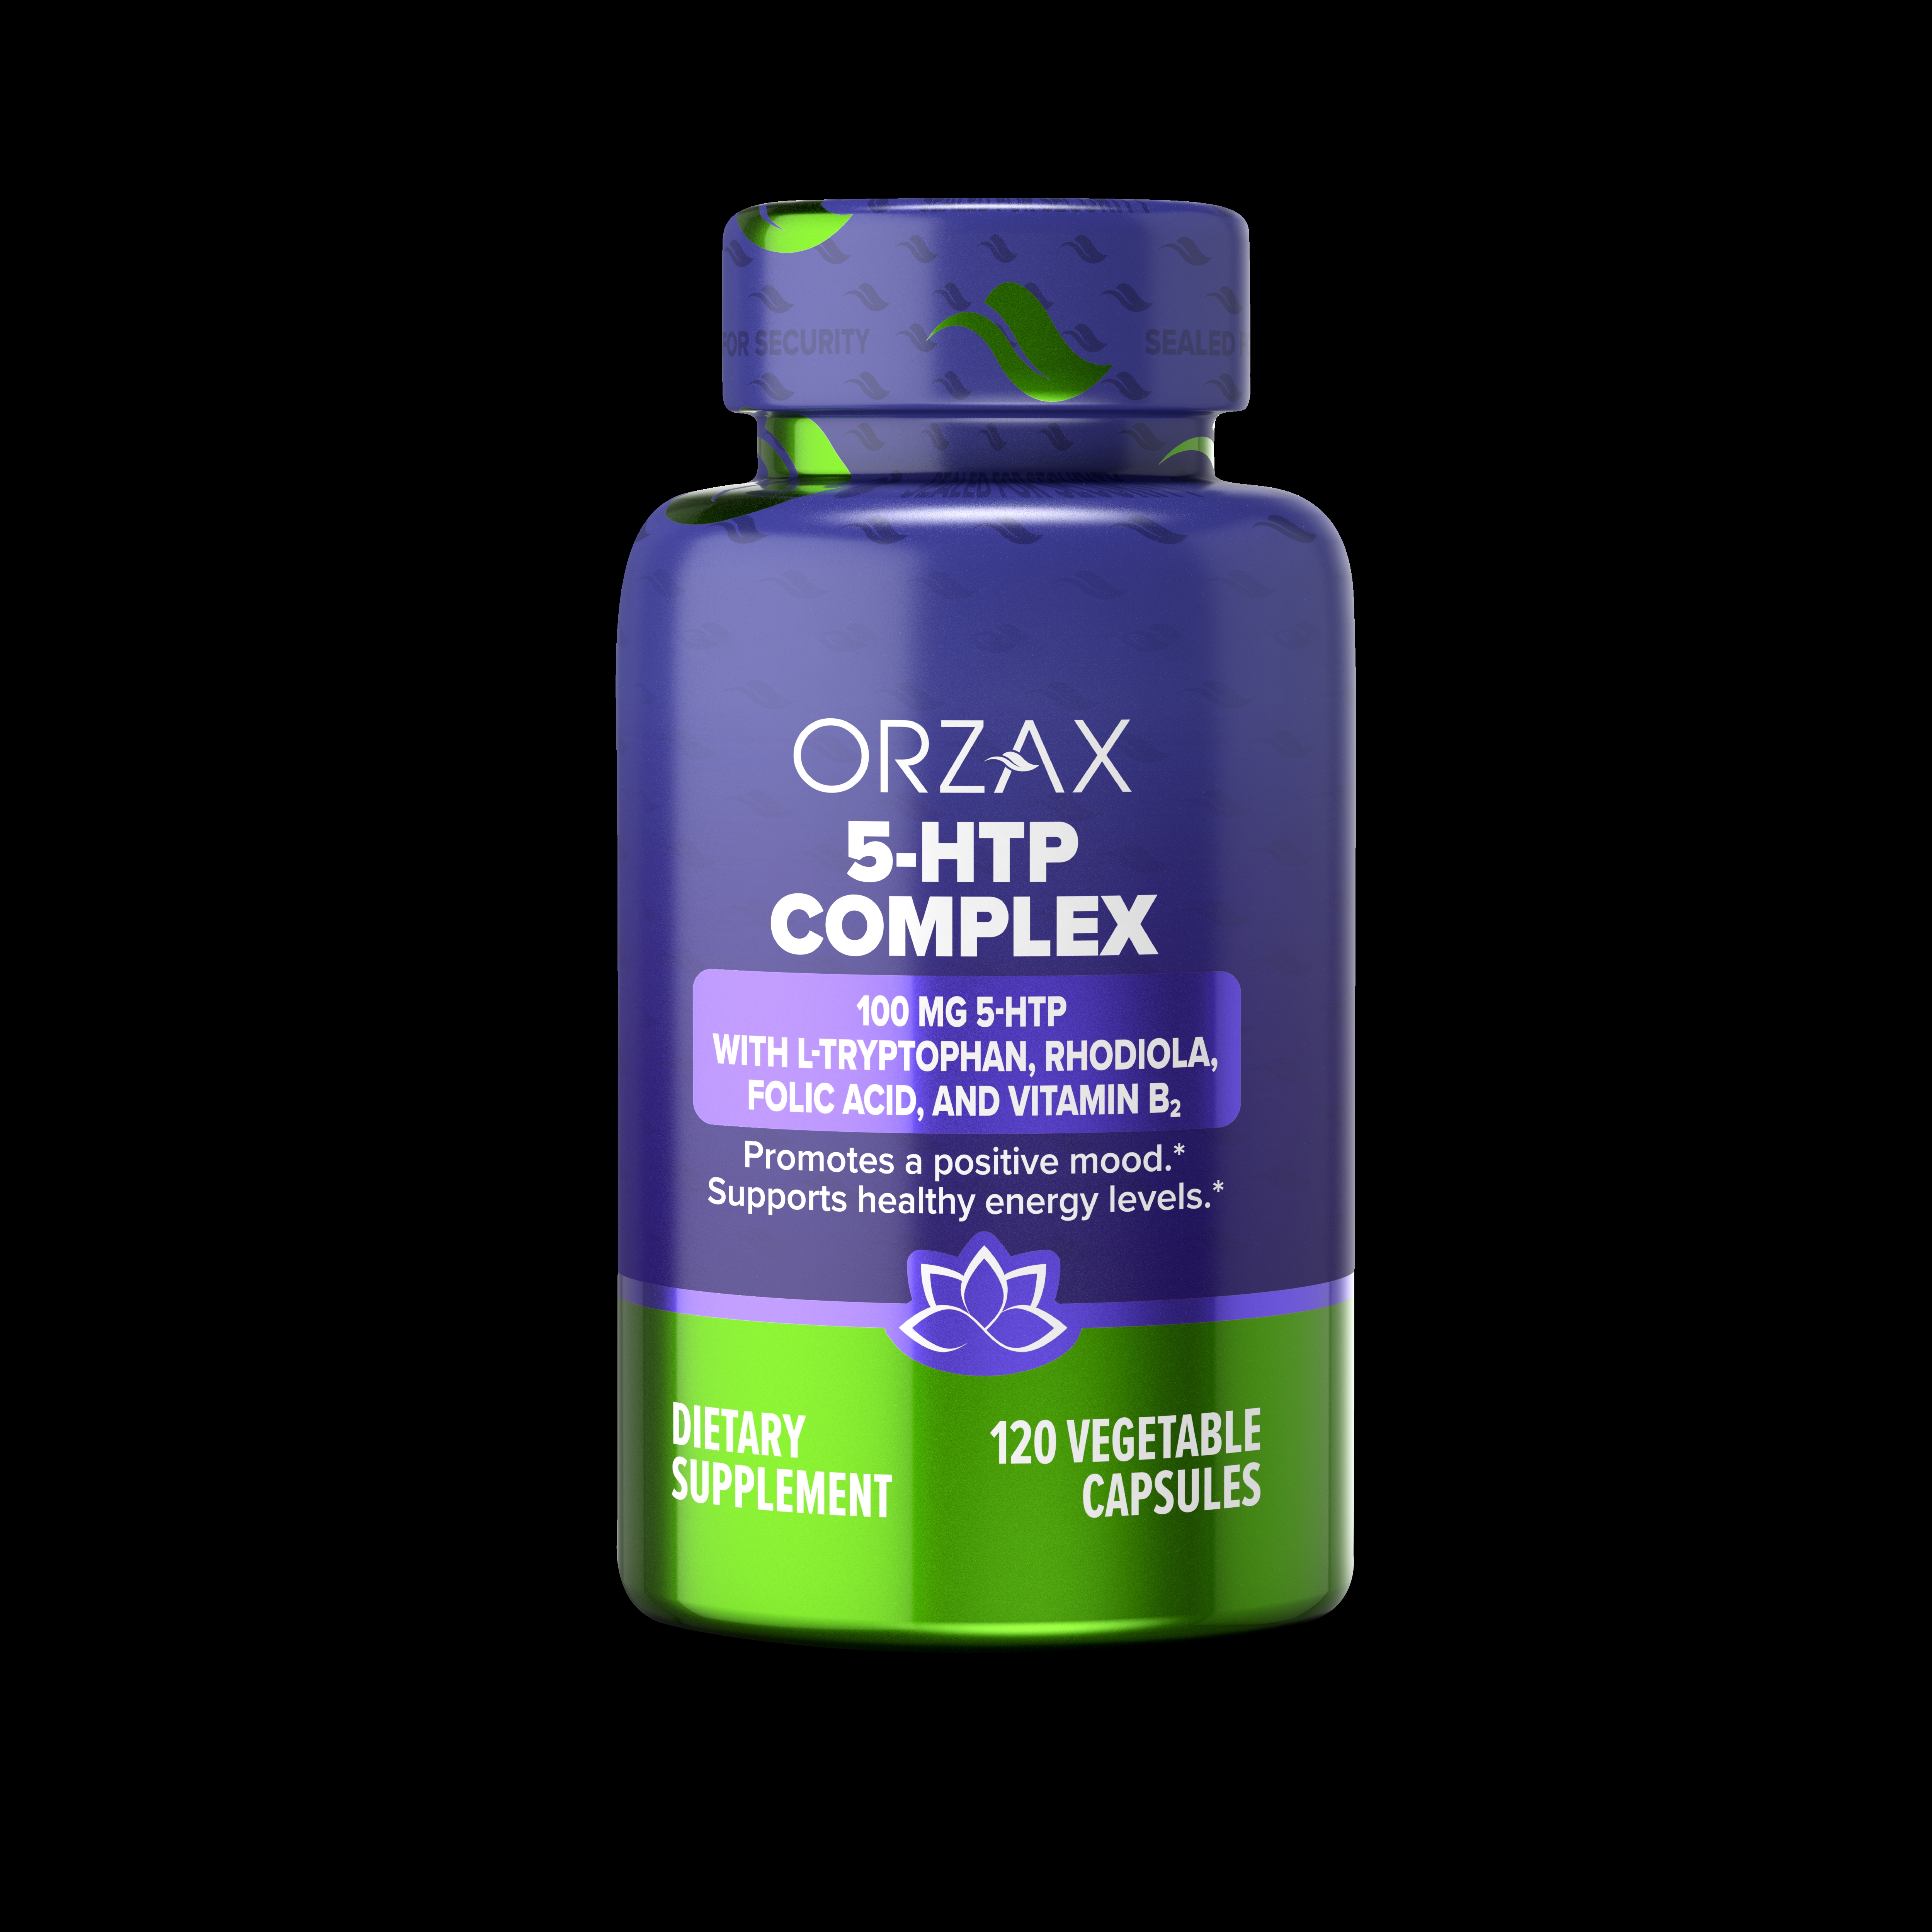 ORZAX 5-HTP COMPLEX